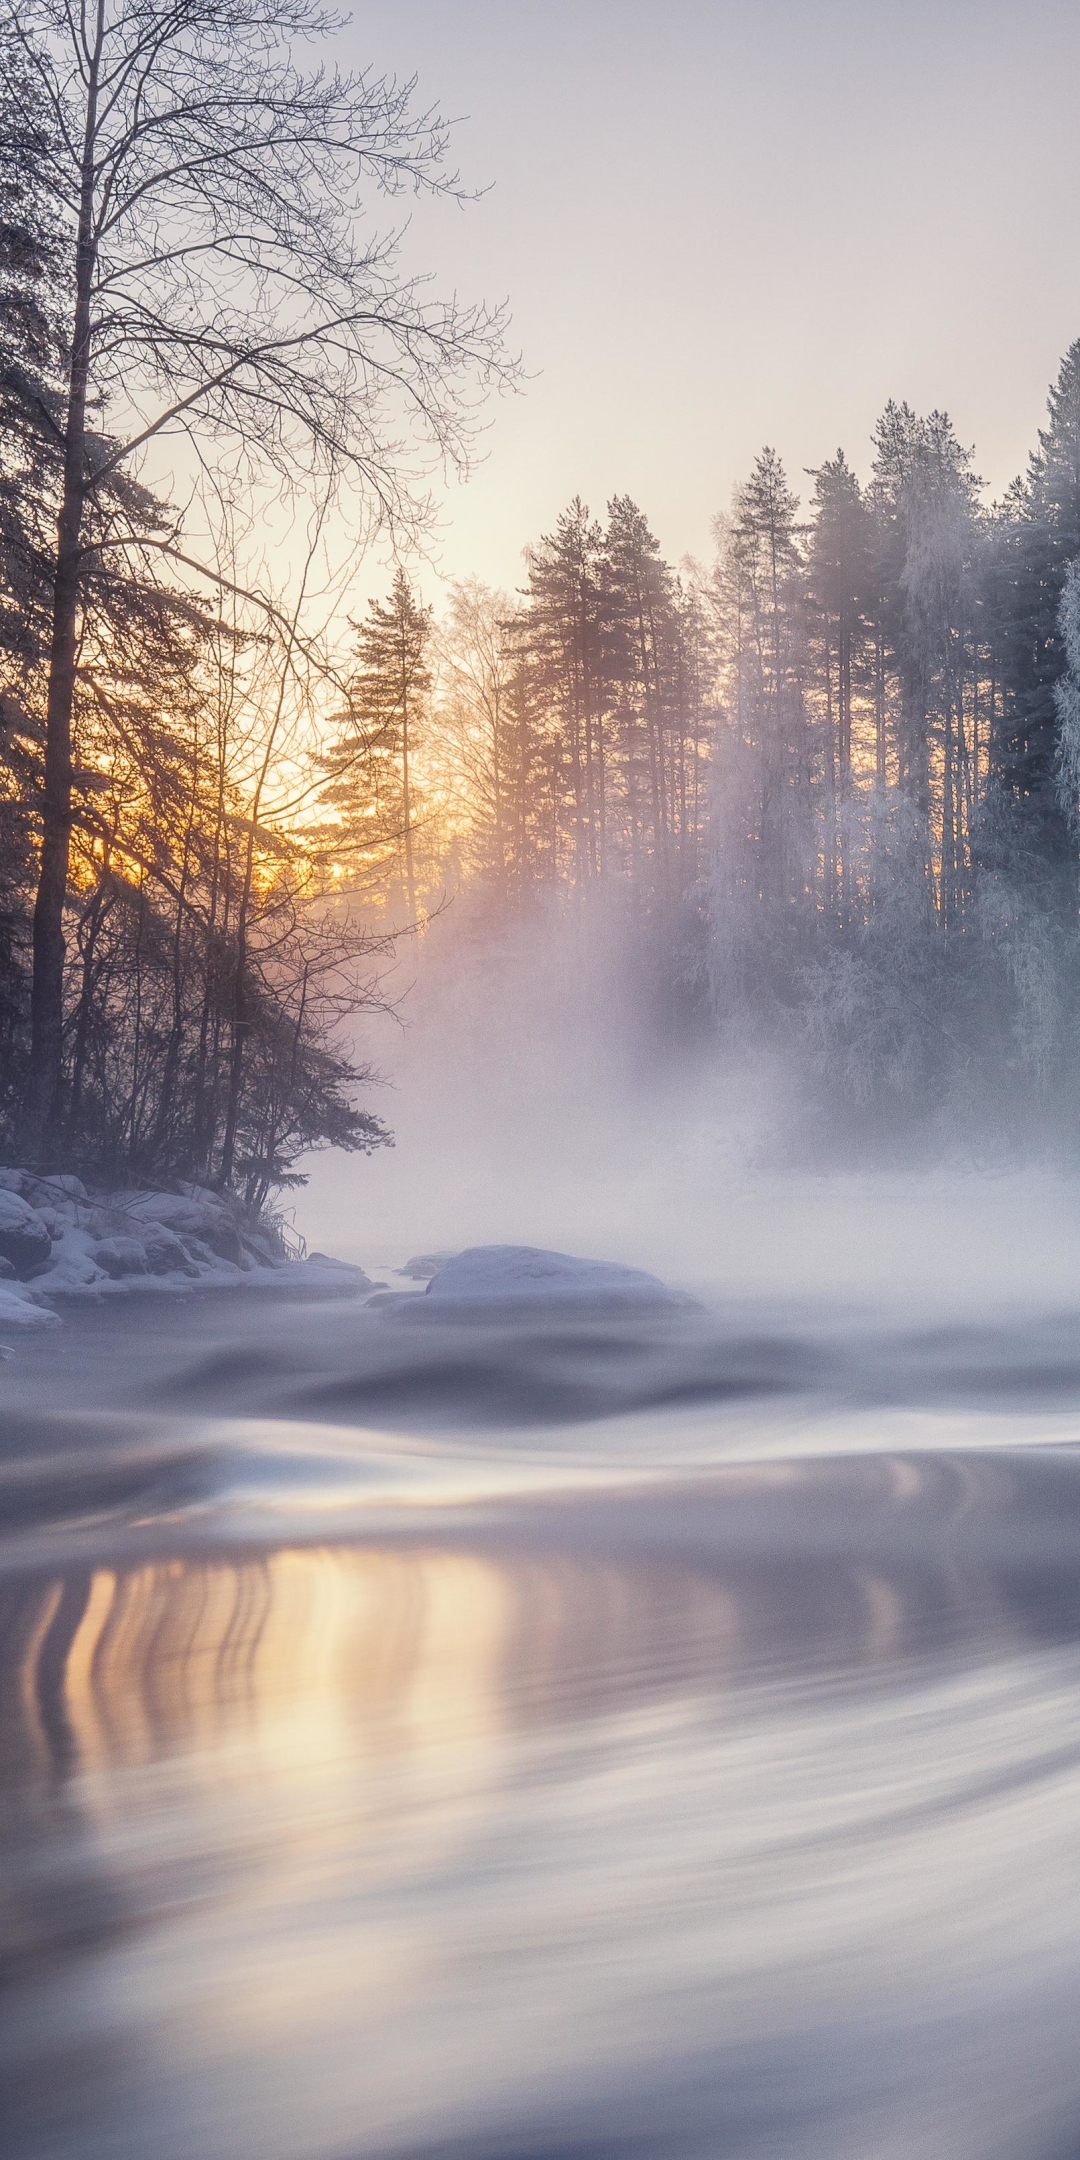 Cold winter Morning, Kapeenkoski Finland by Bansman